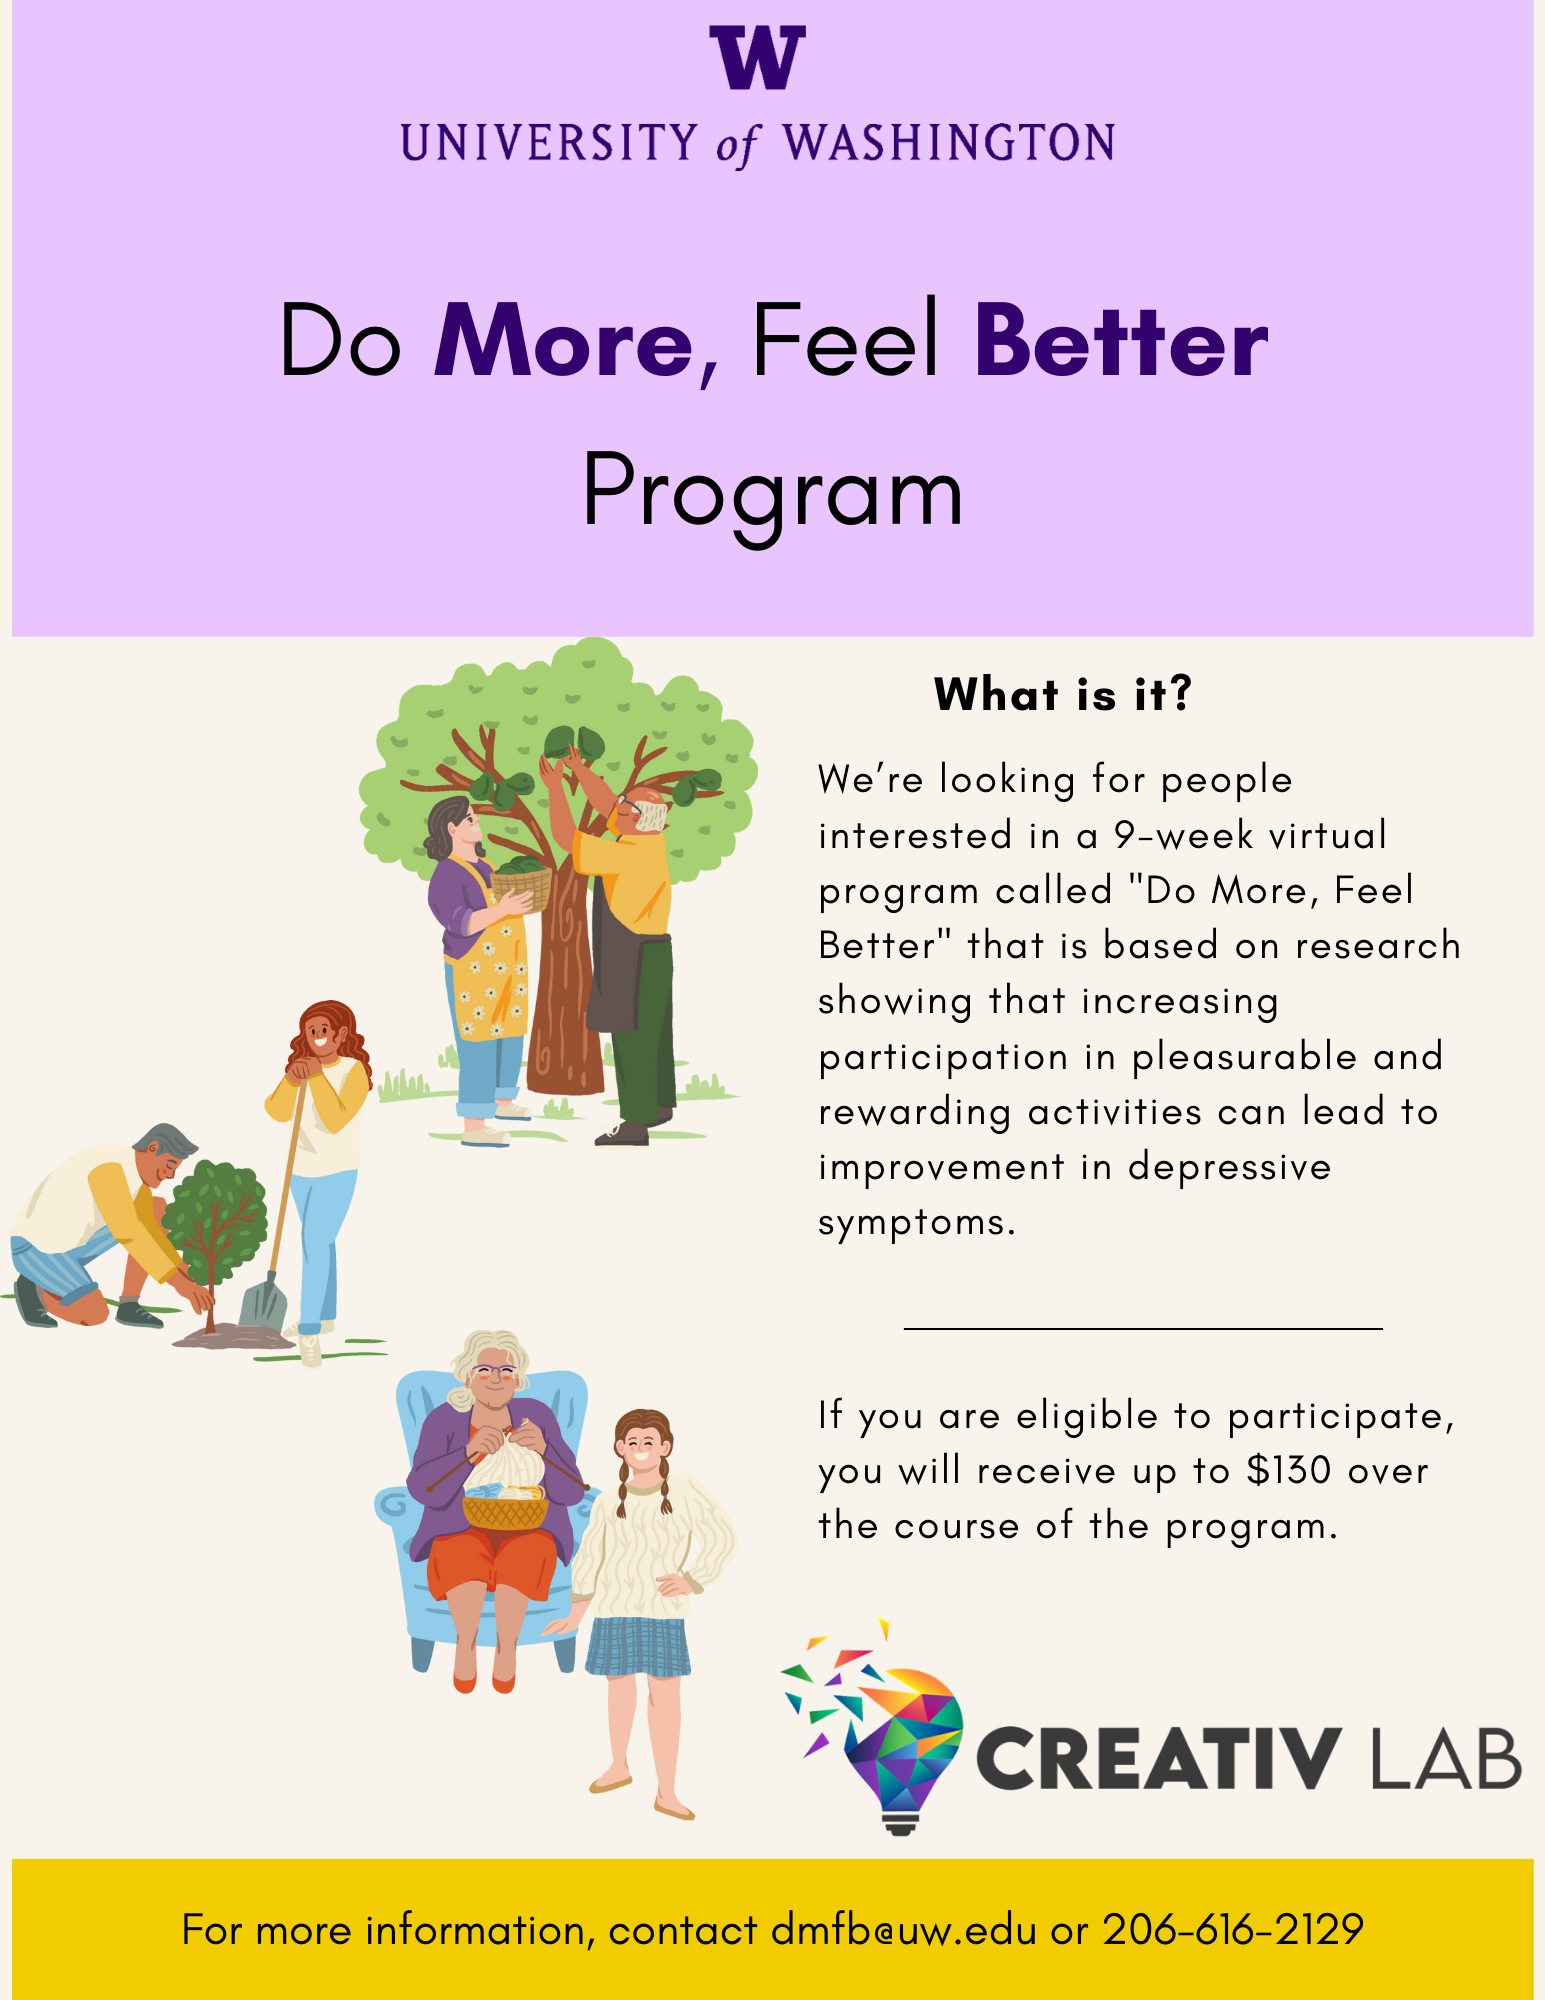 Do More Feel Better seeks participants